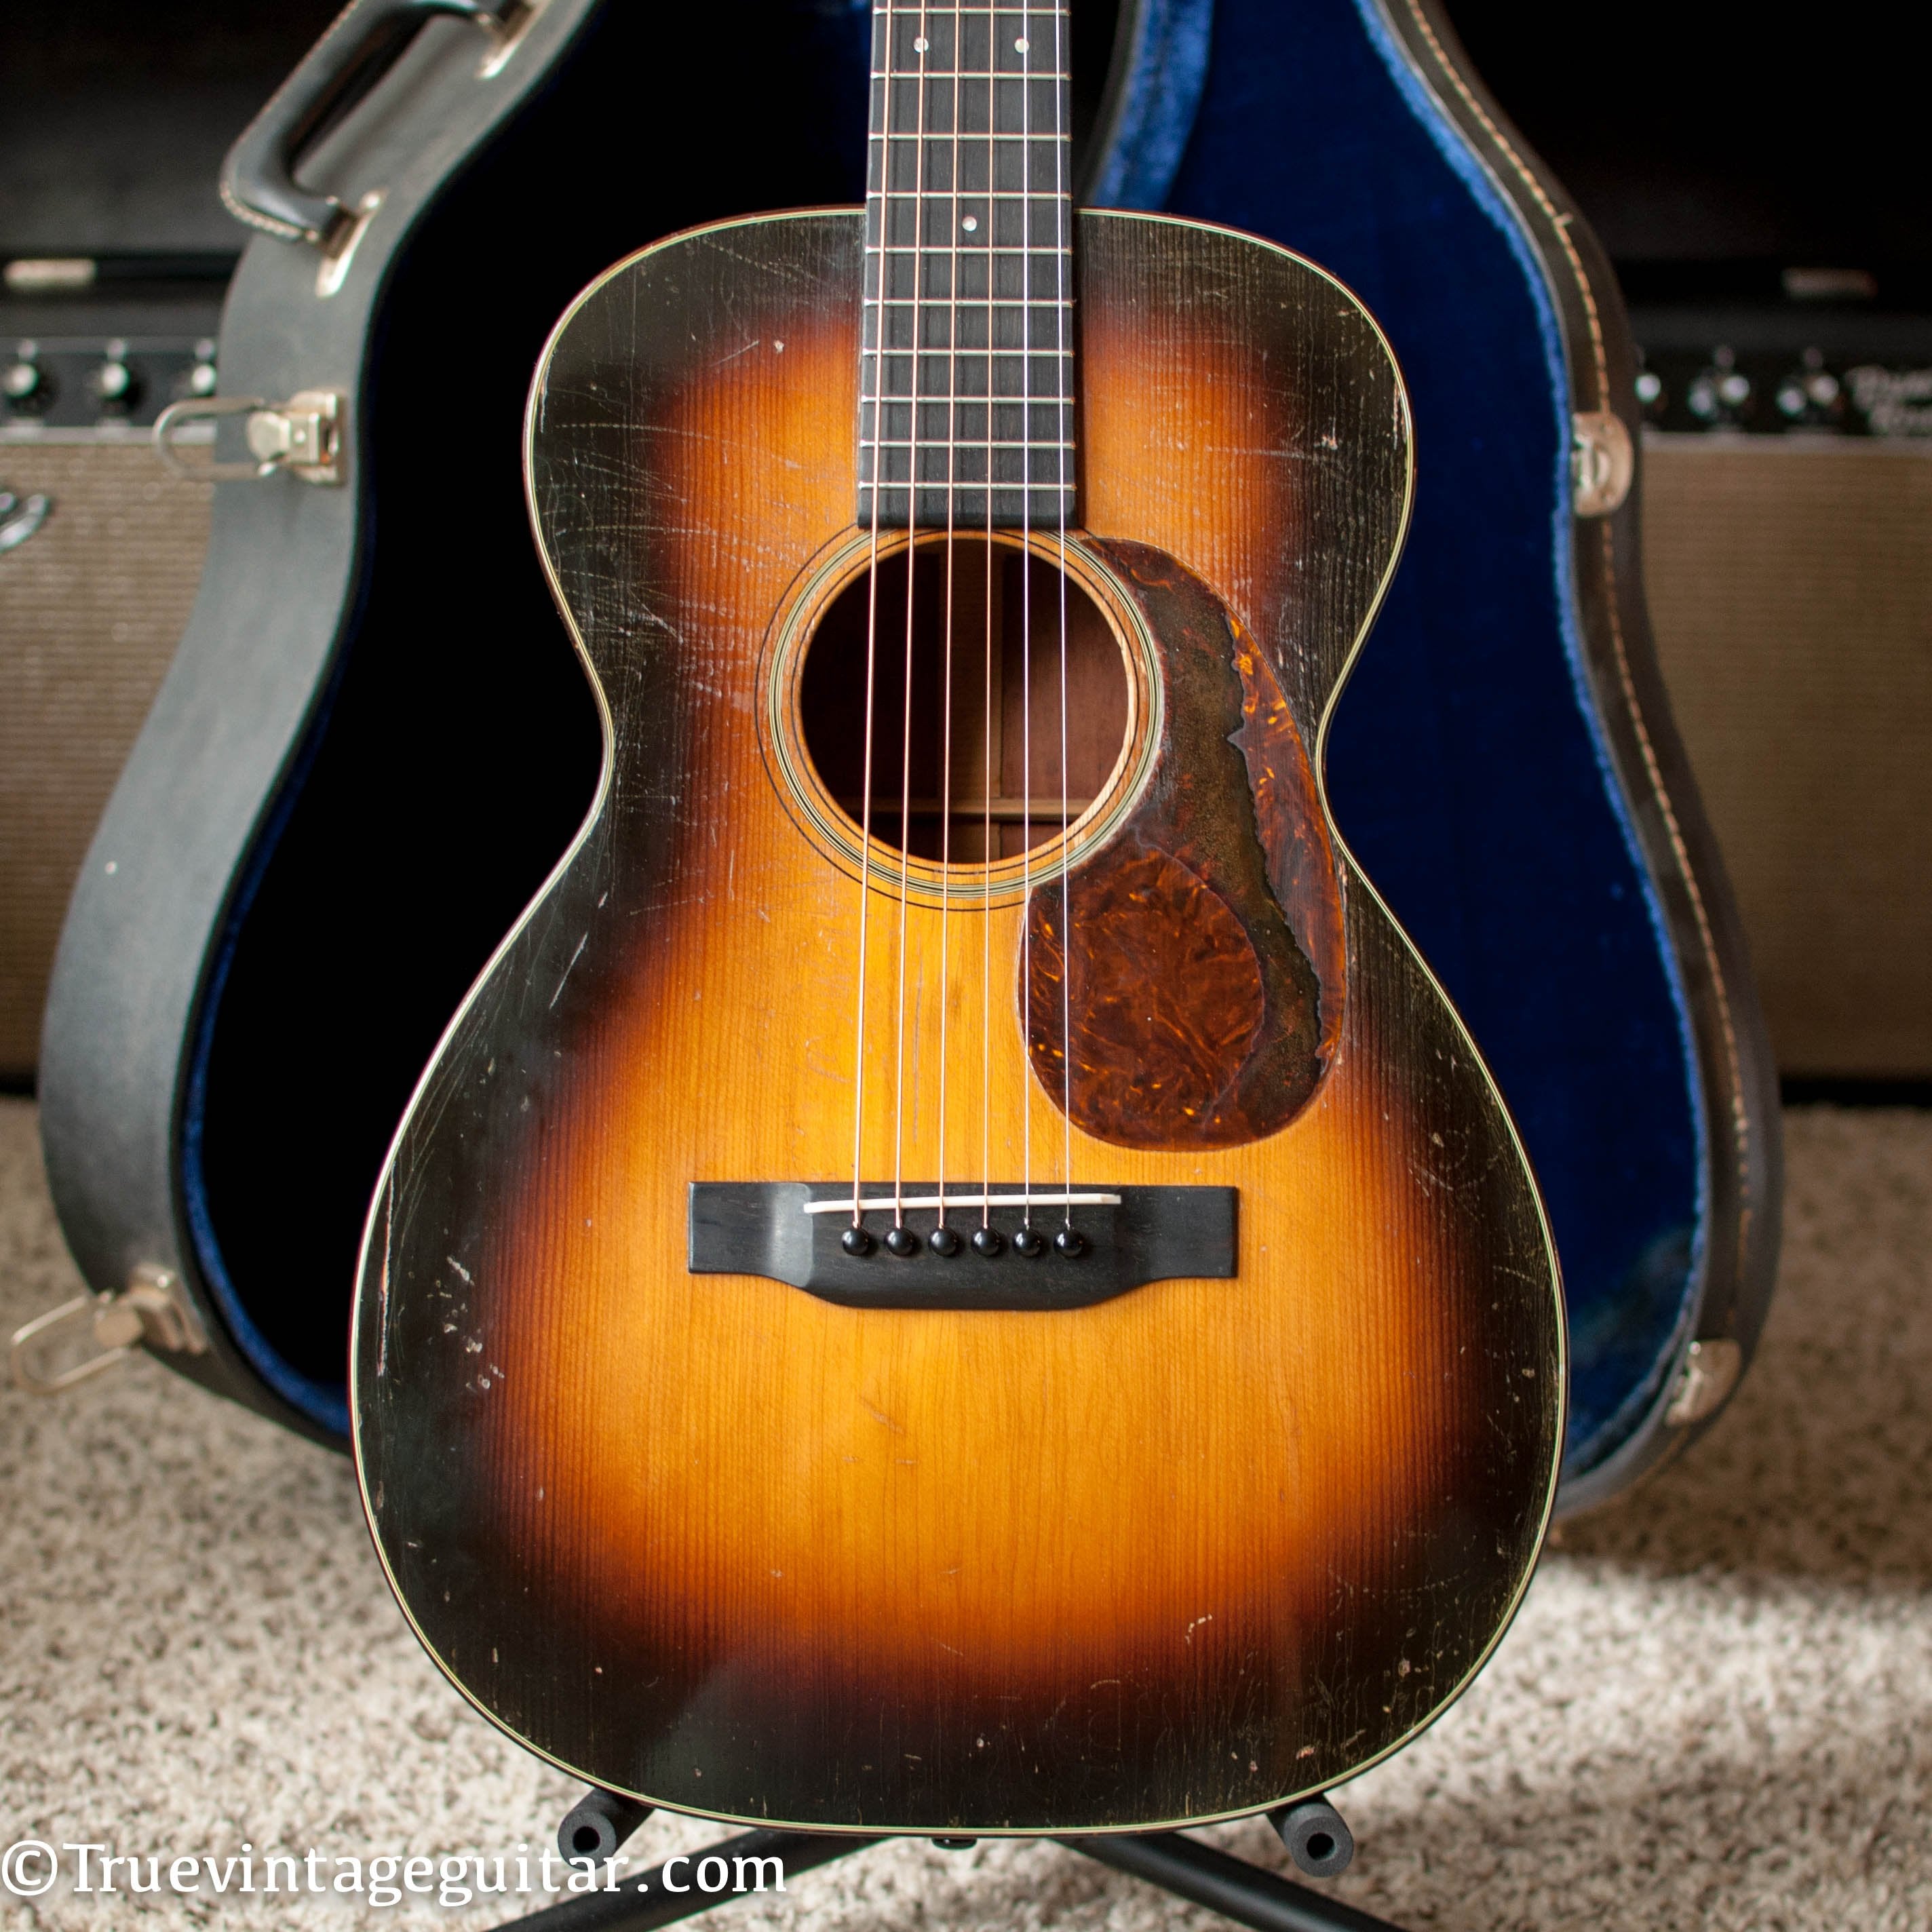 Vintage Shaded top Martin guitars – True Vintage Guitar